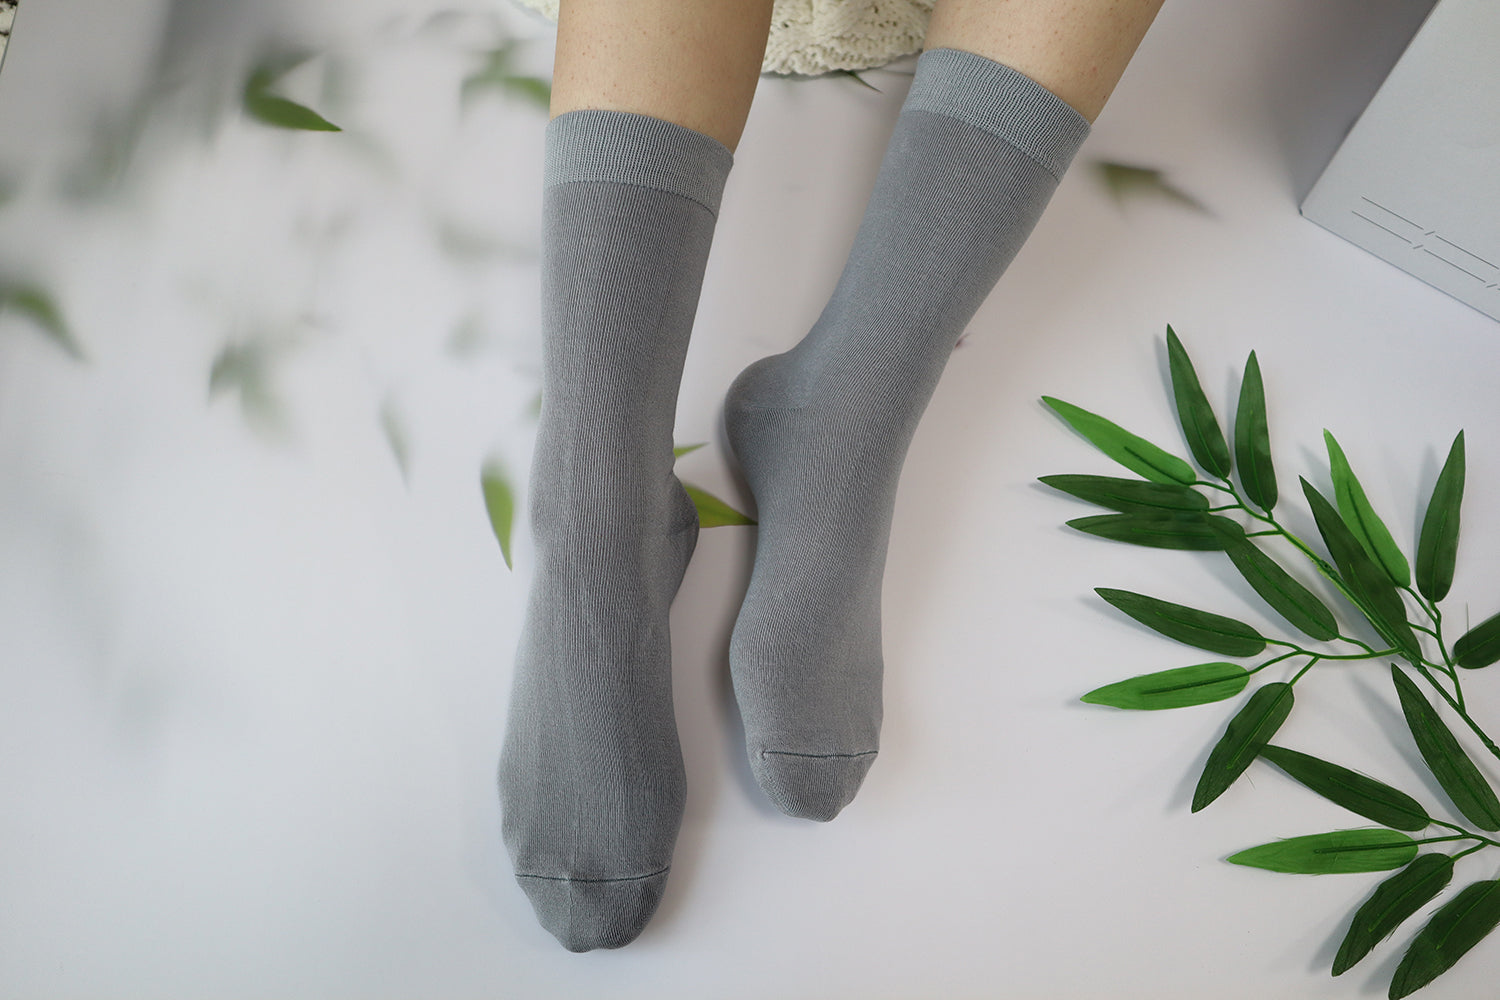 Where are bamboo socks made